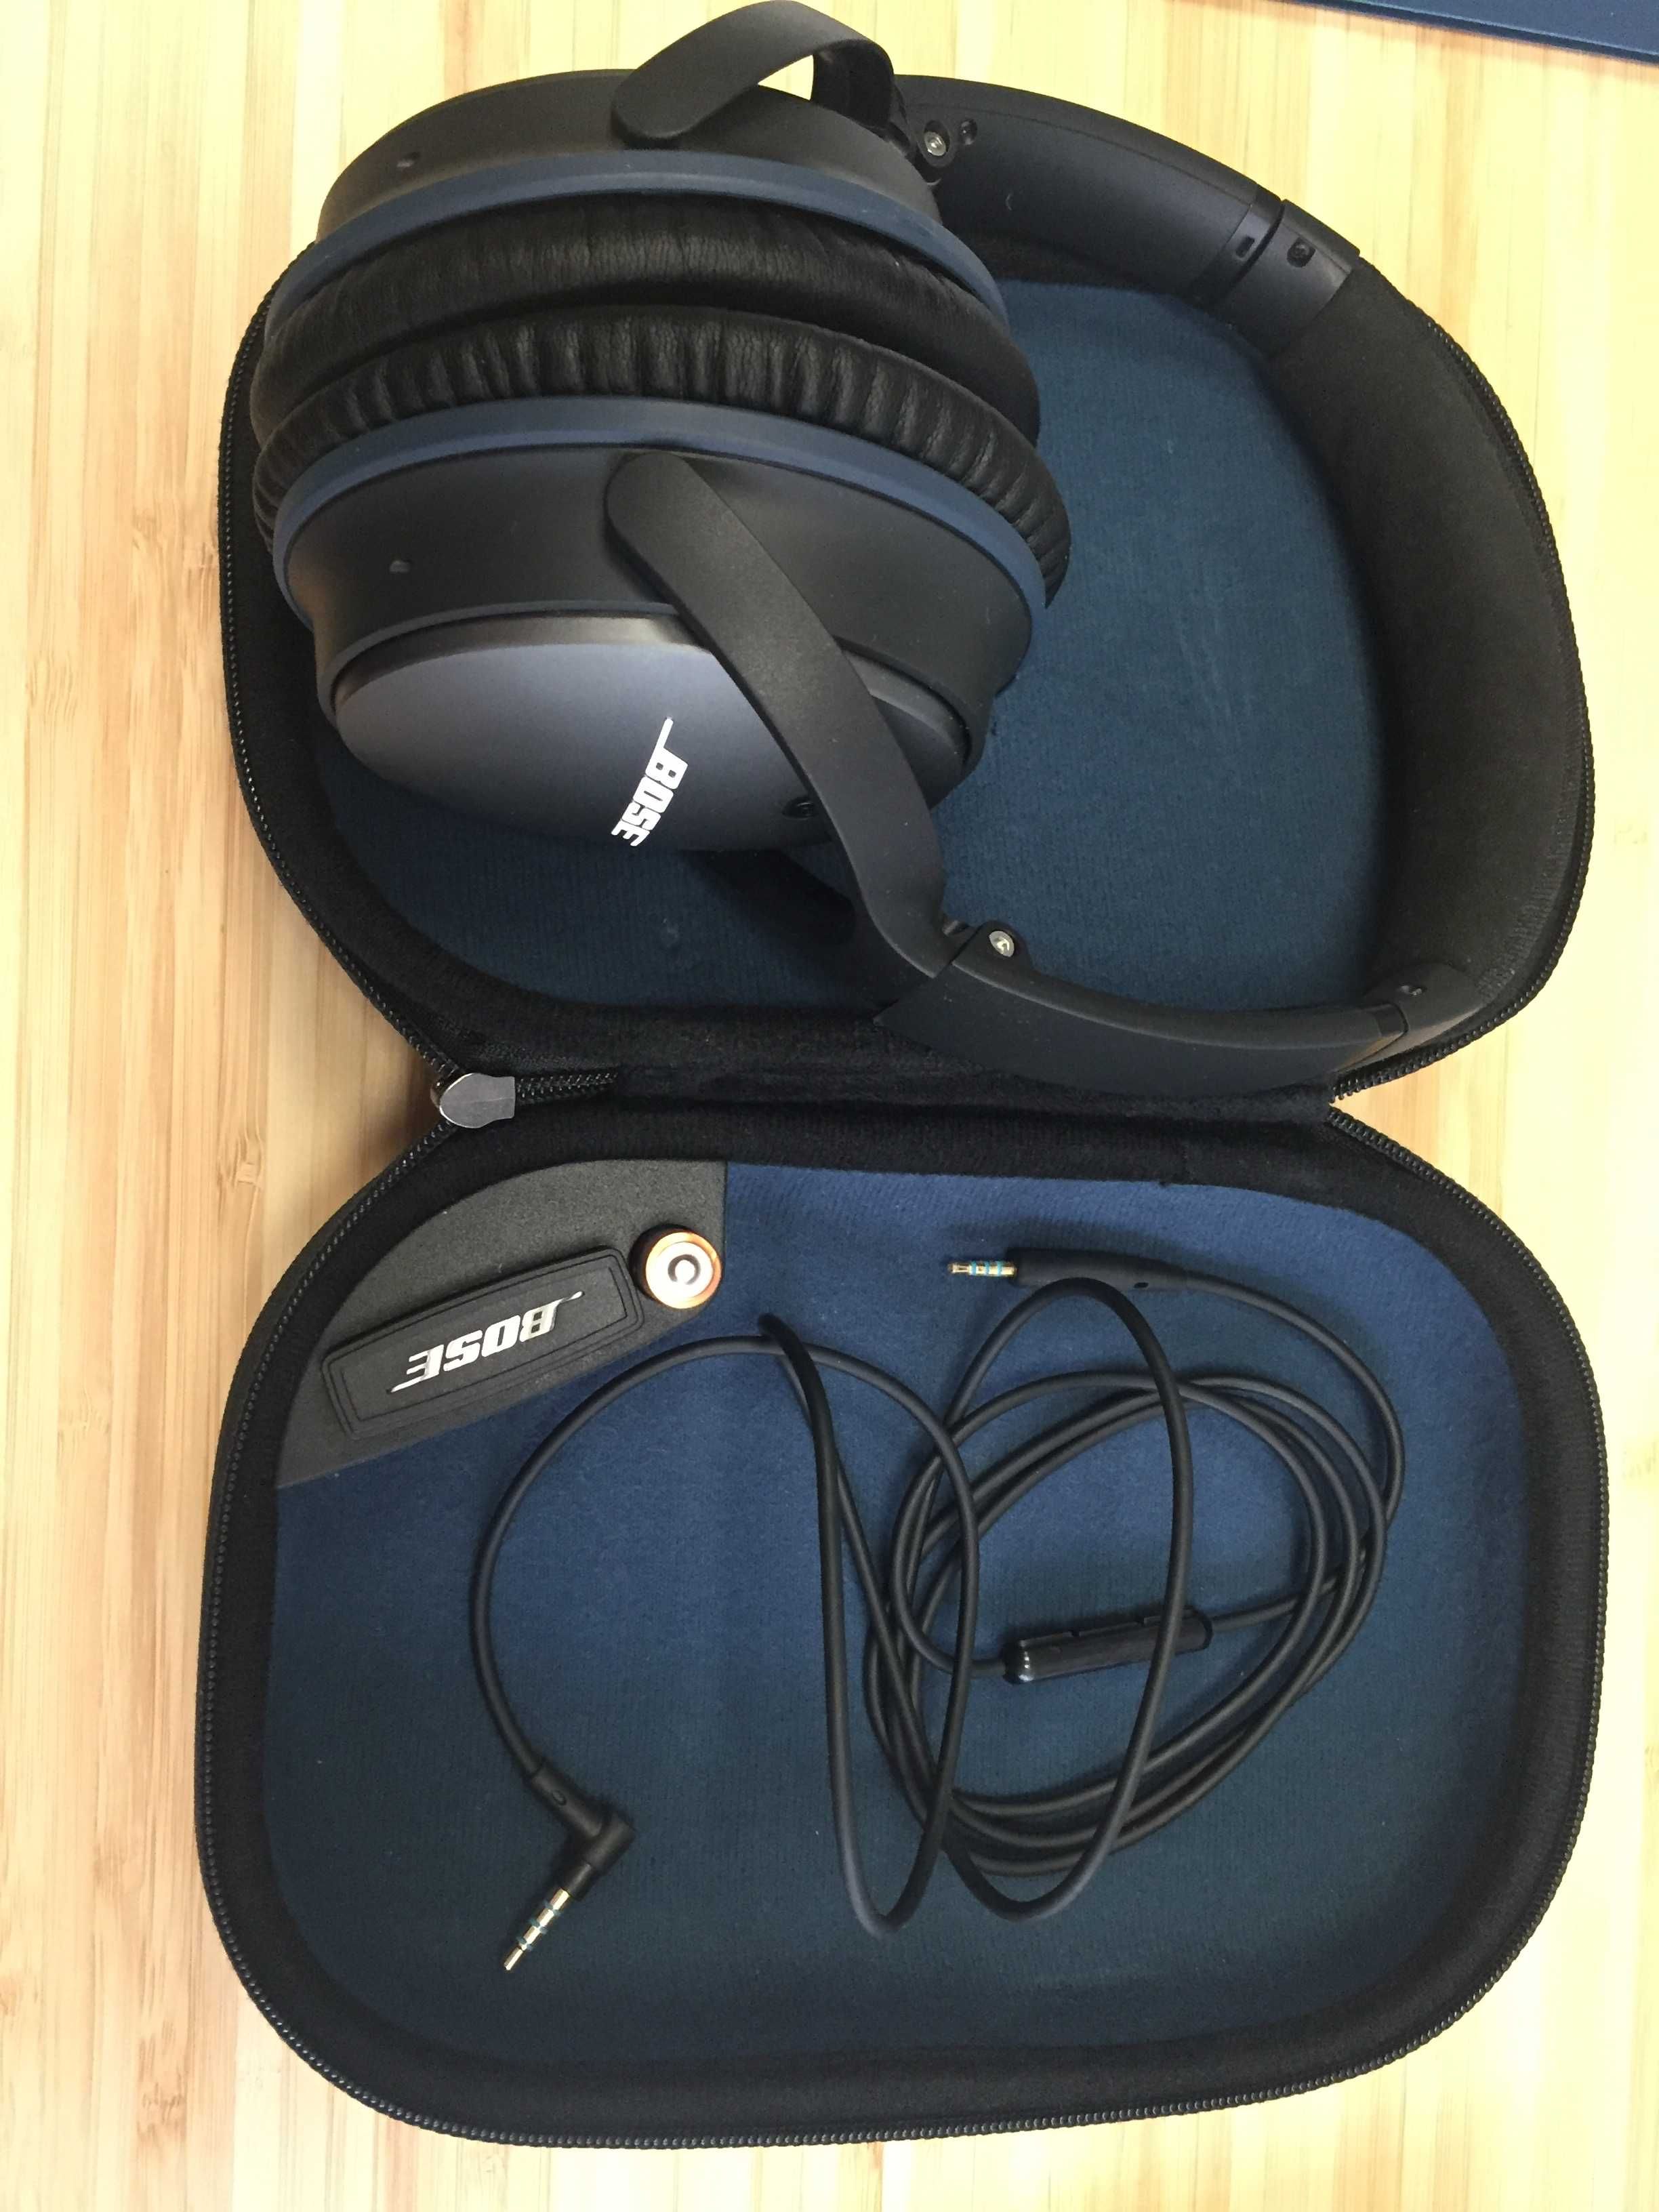 Auscultadores / Headphones Bose QuietComfort 25